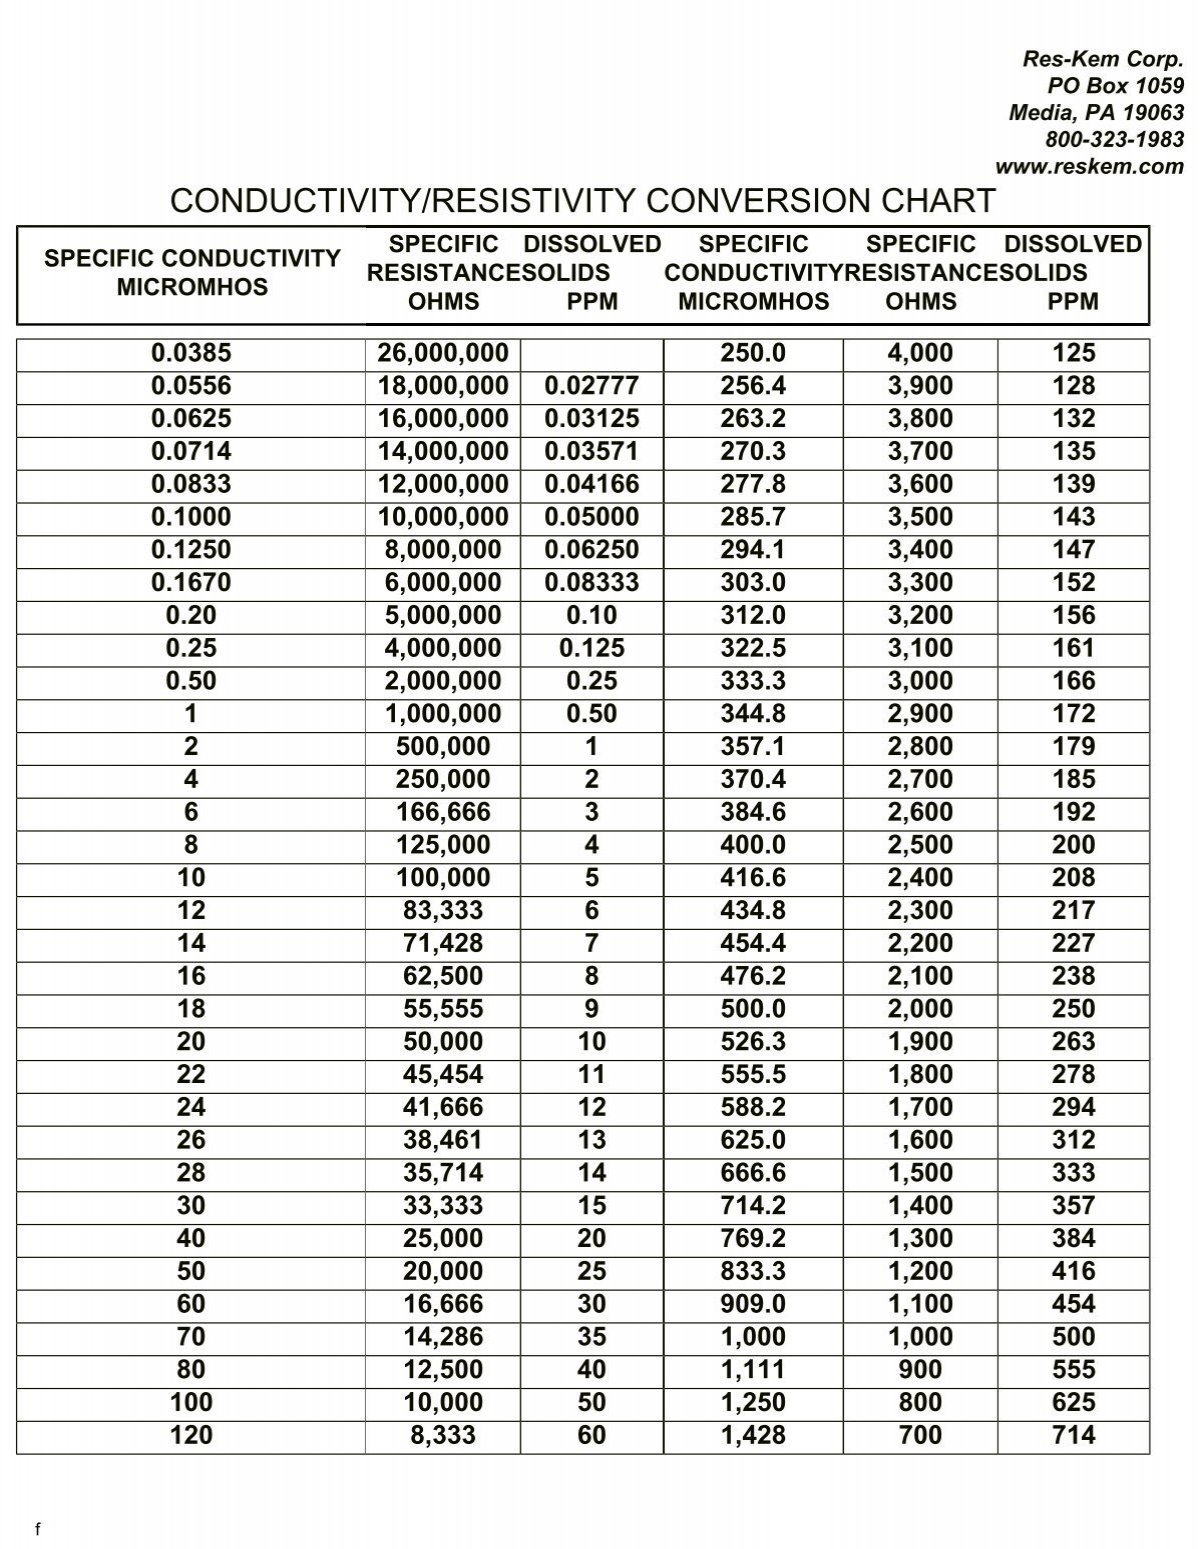 conductivity/resistivity conversion chart - Res-Kem Corporation